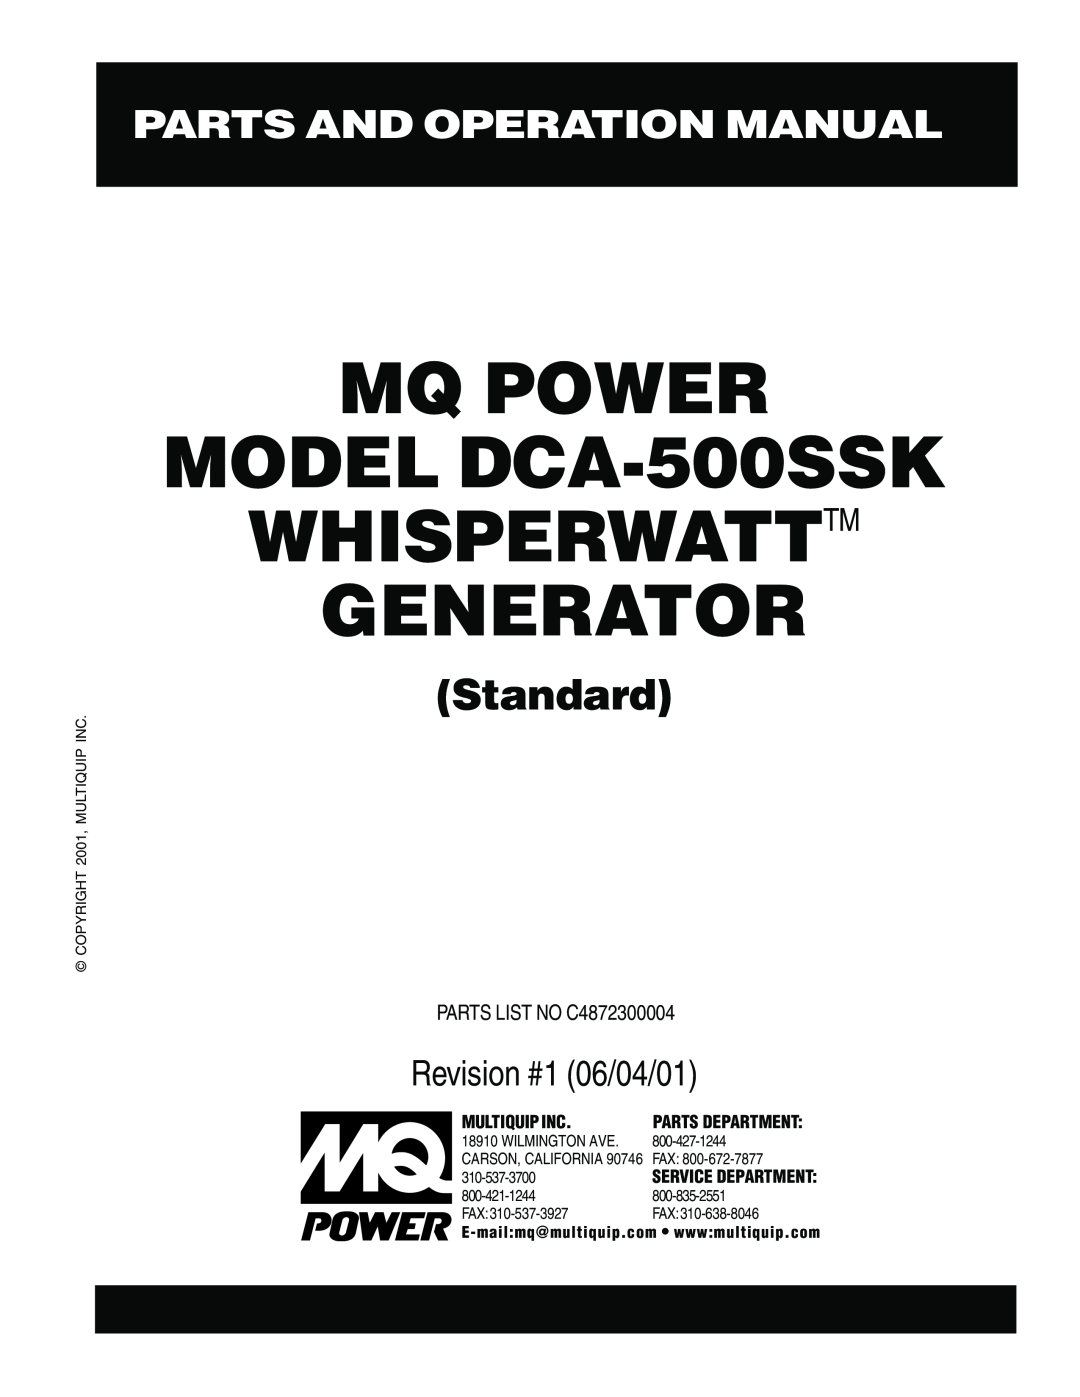 Multiquip operation manual Parts And Operation Manual, MQ POWER MODEL DCA-500SSK WHISPERWATTTM GENERATOR, Standard 